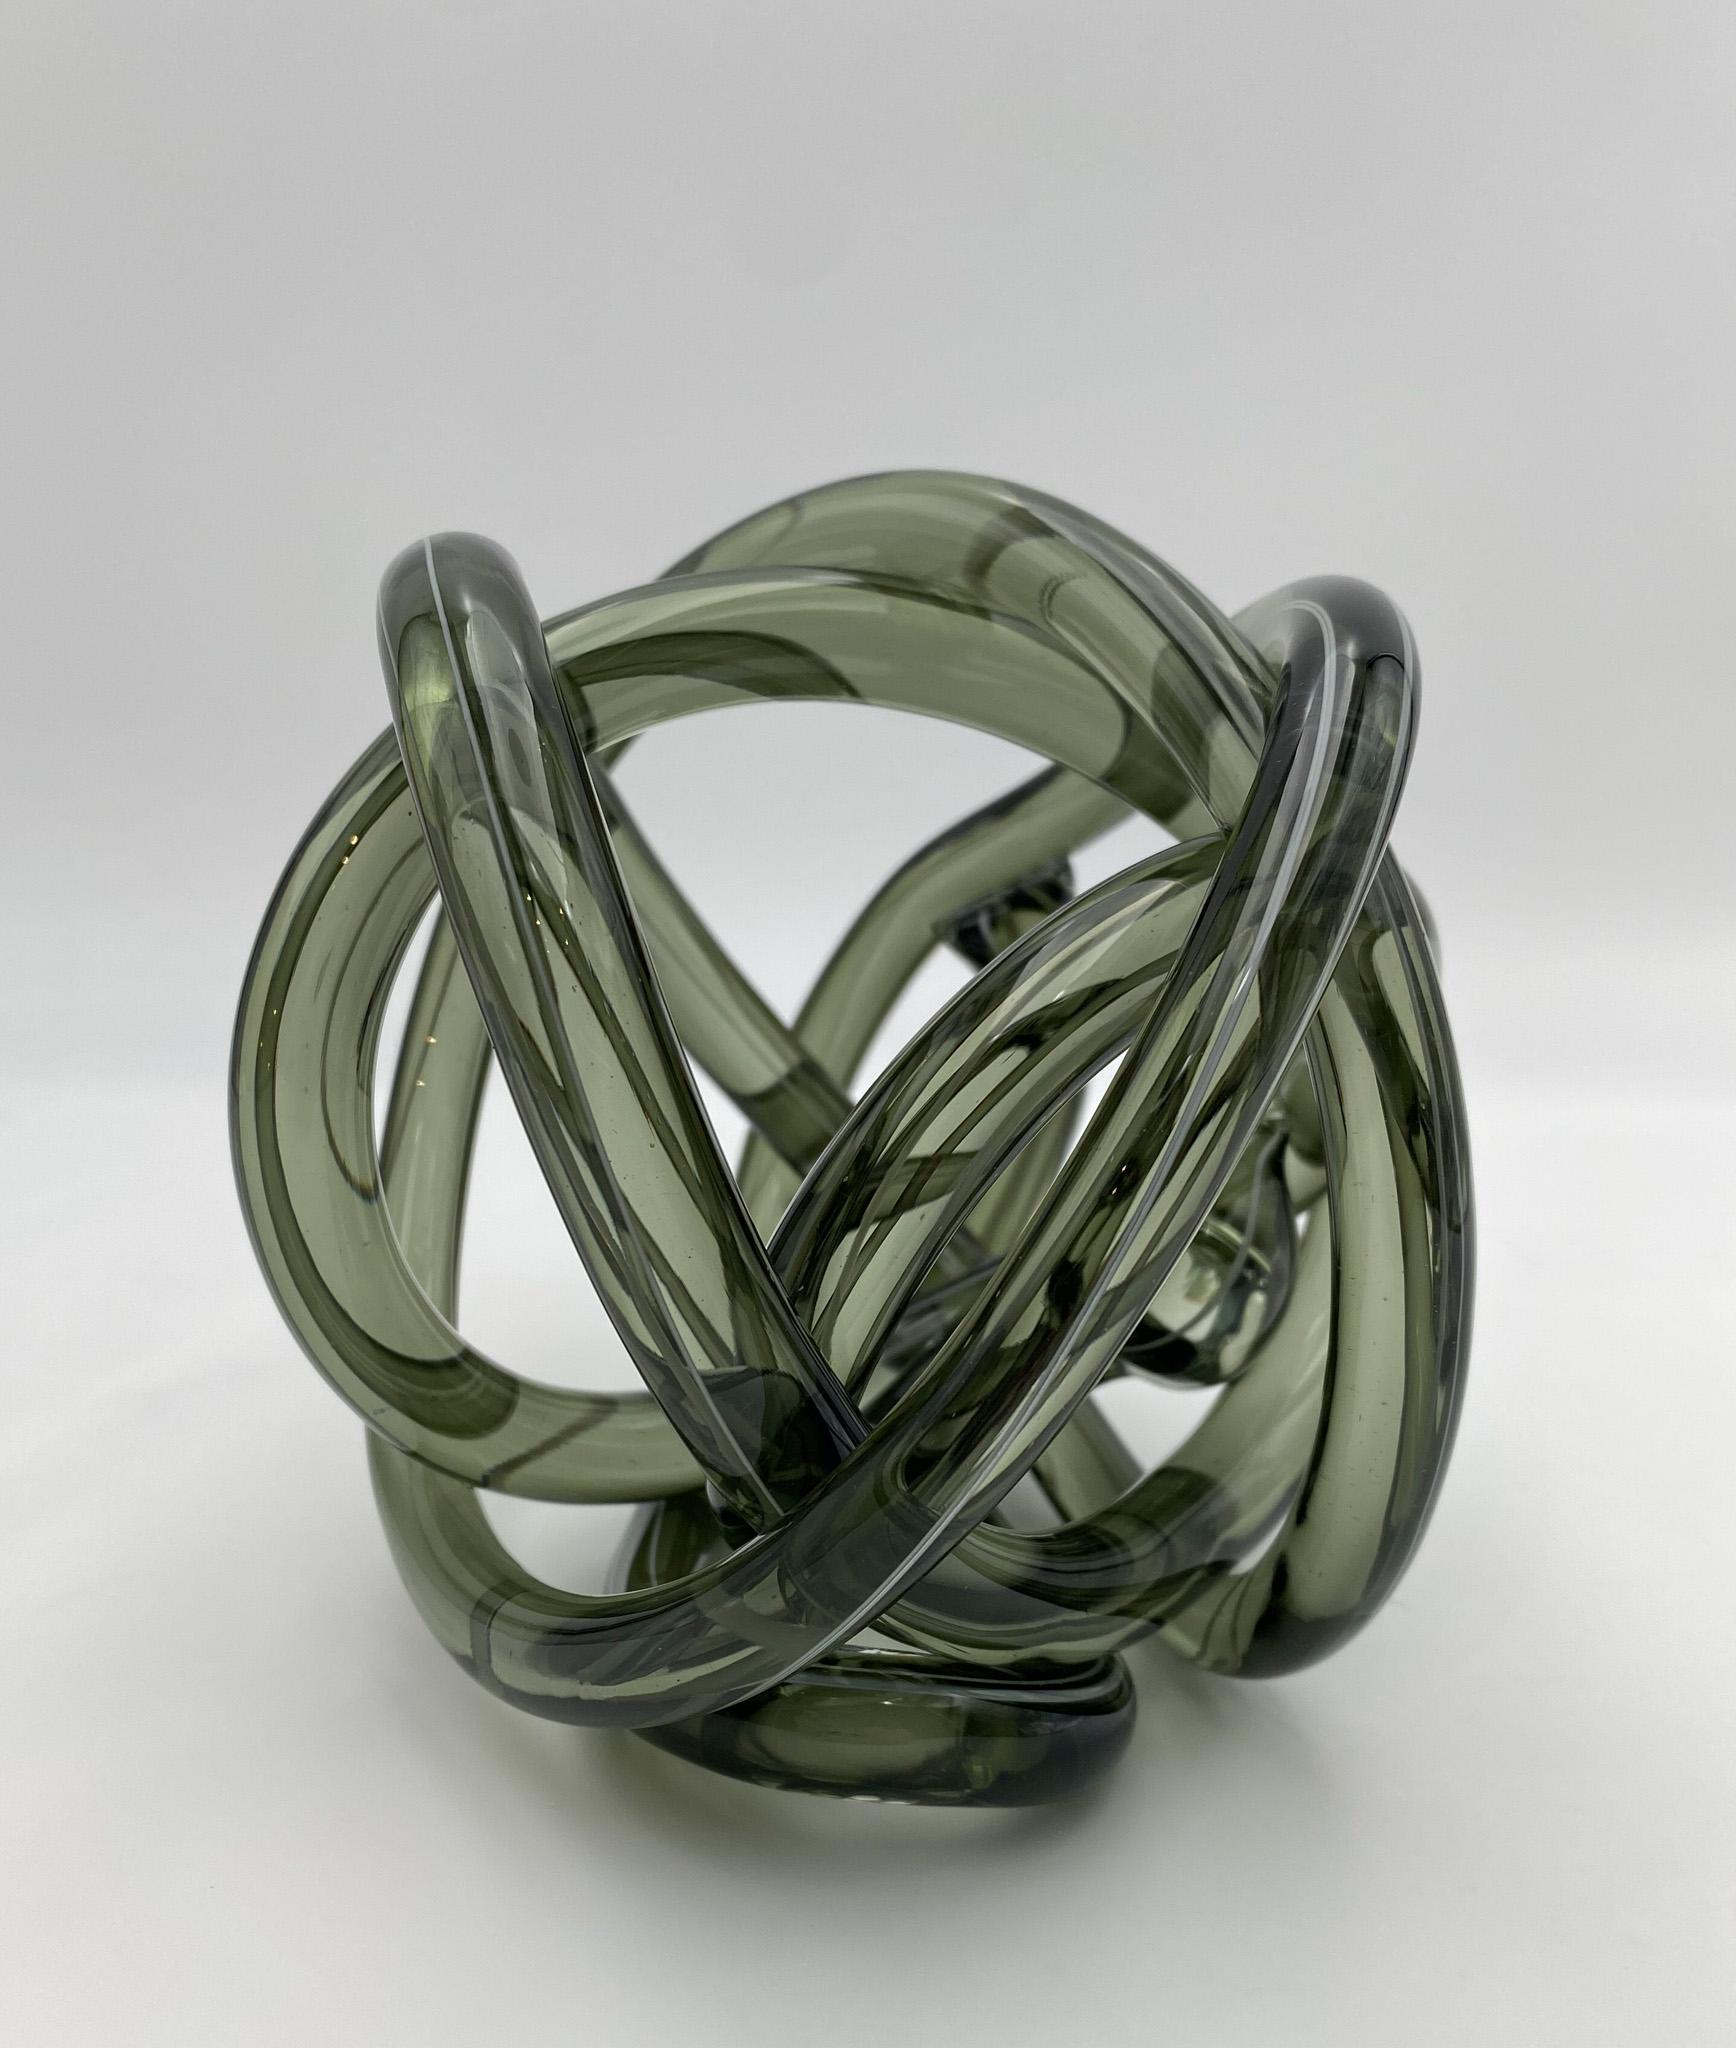 American Abstract Art Glass Knot Sculpture 